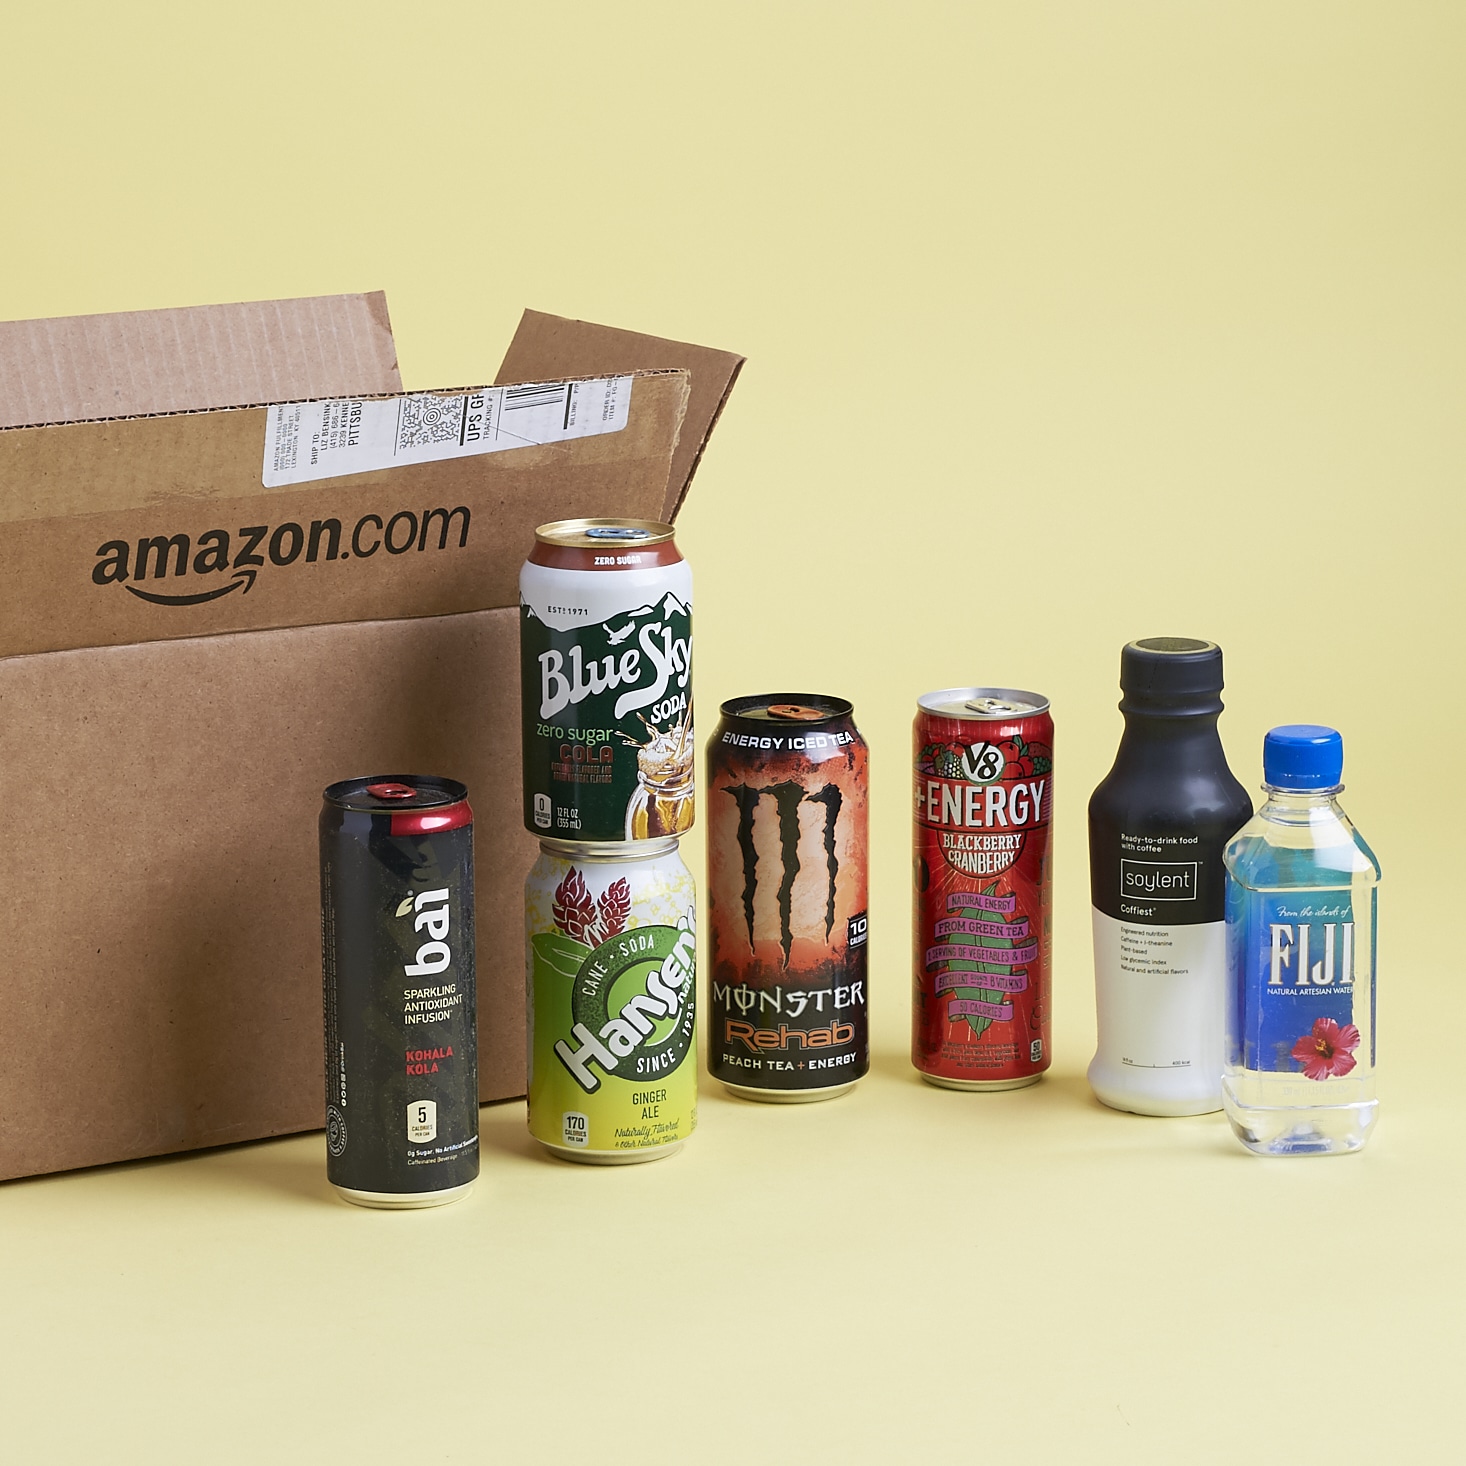 Amazon Beverage Sample Box Review – June 2017